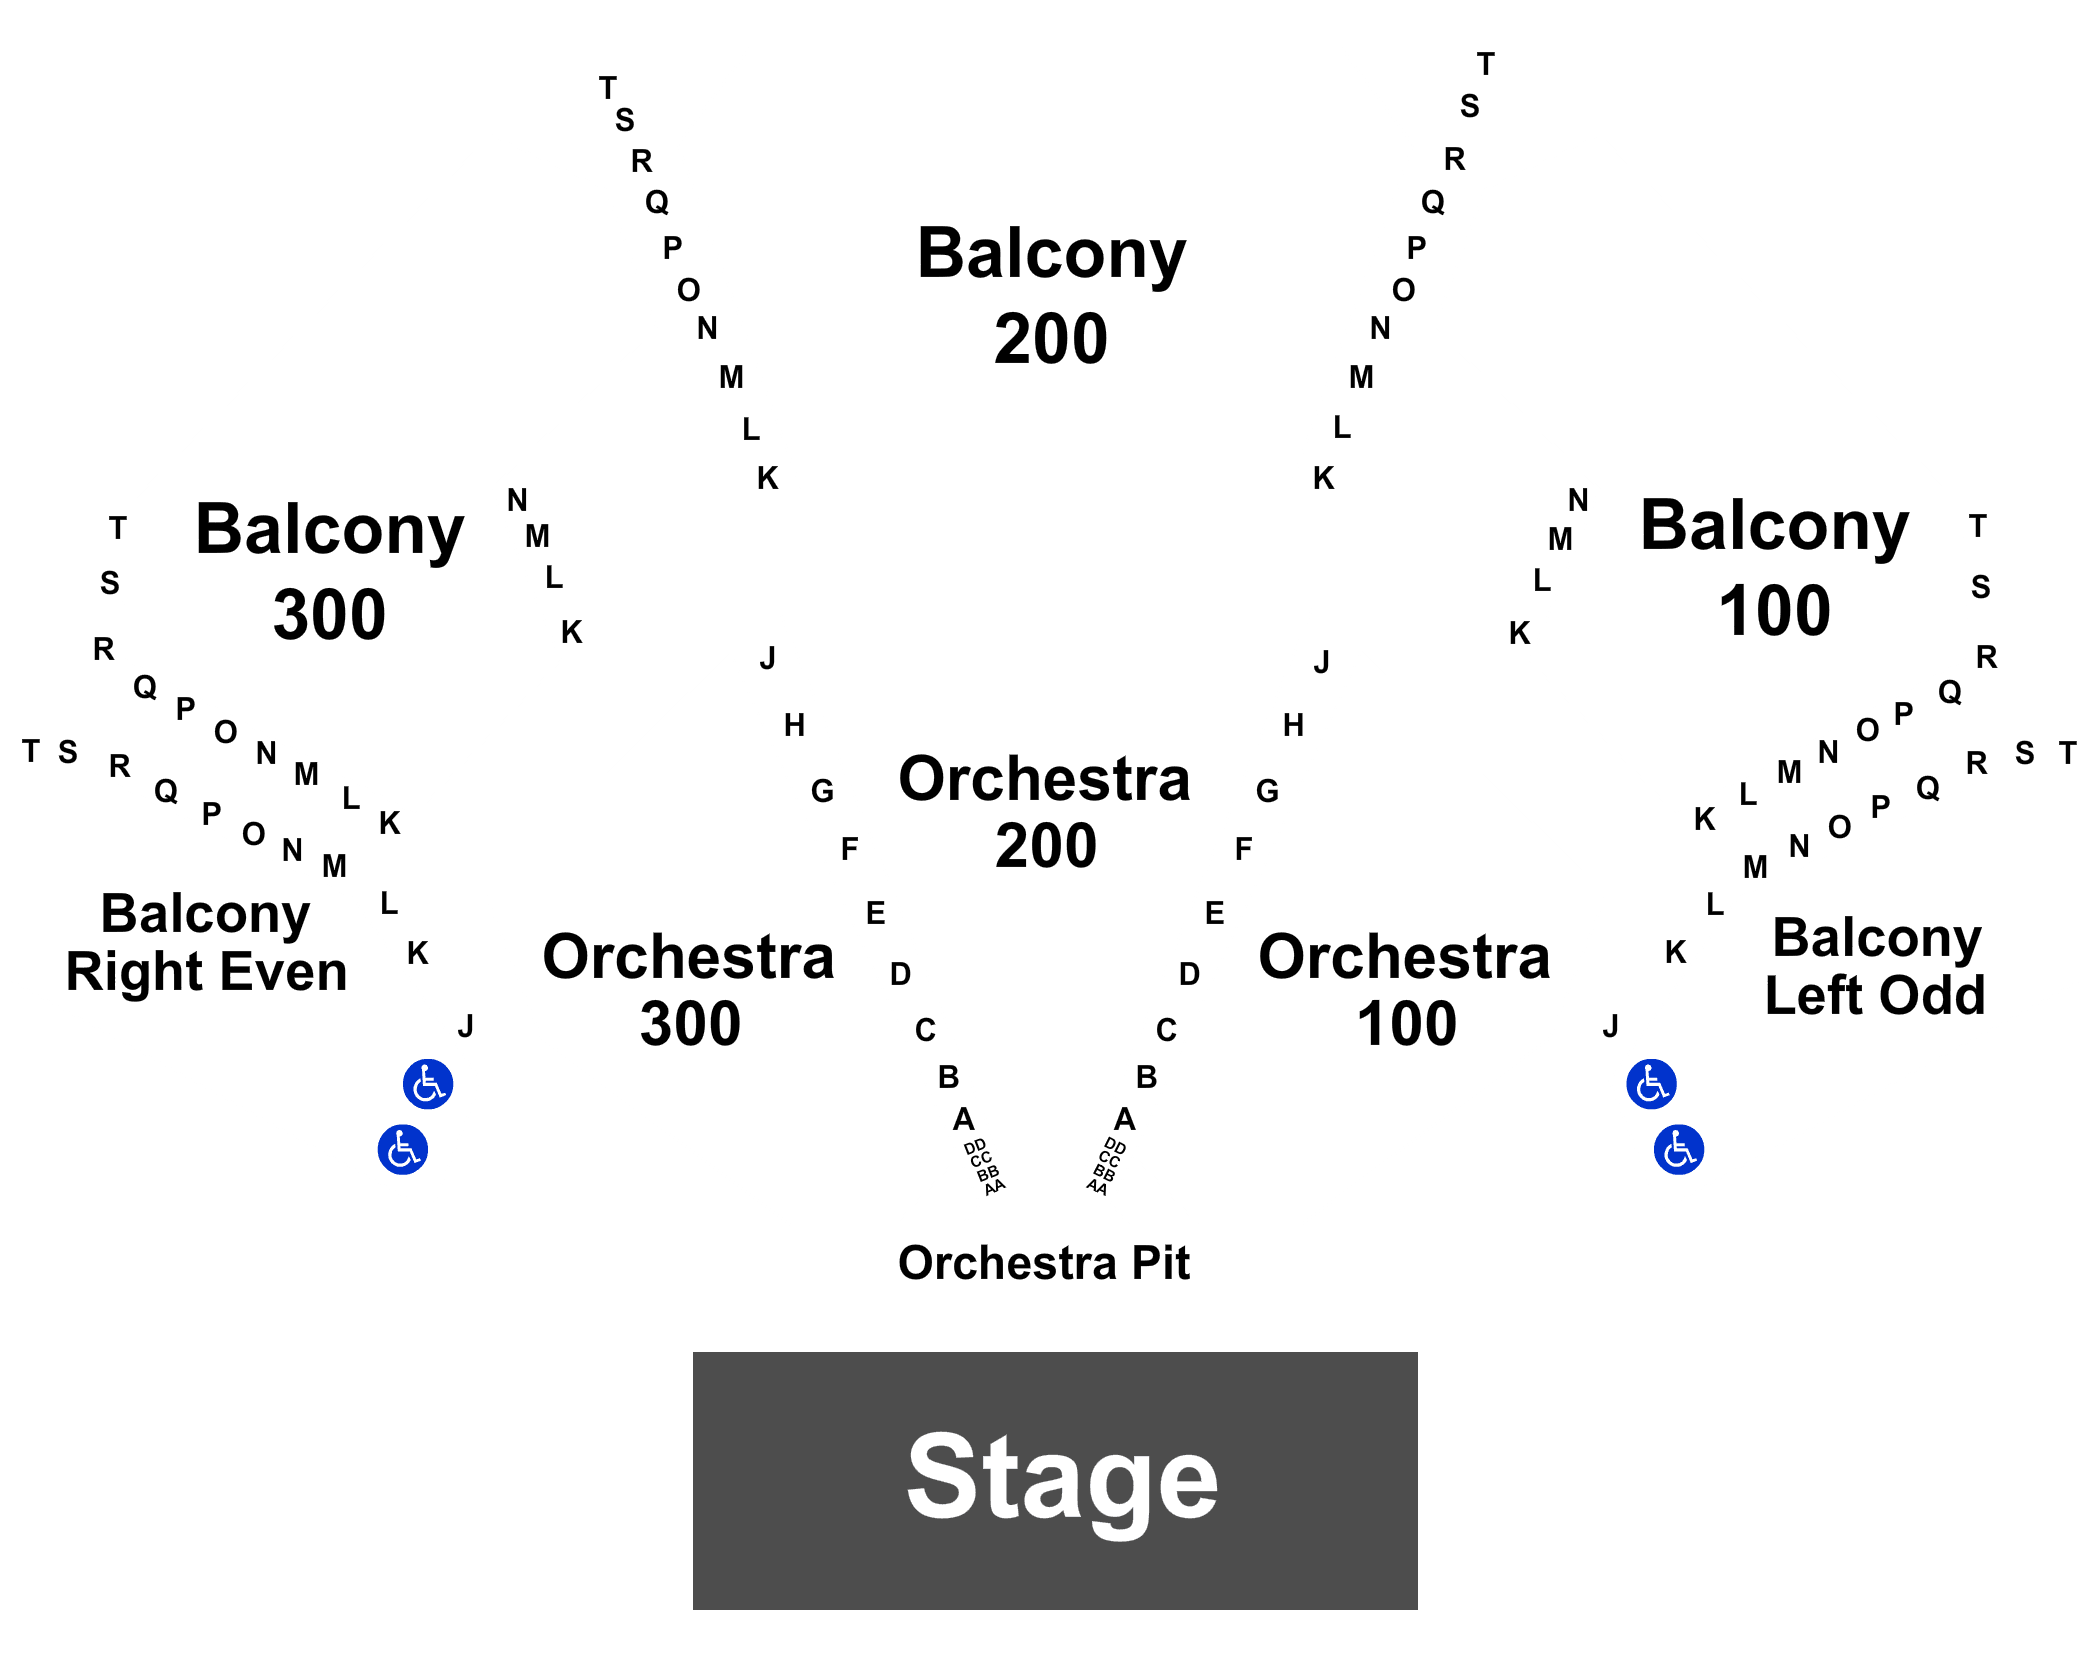 Bjcc Theater Seating Chart